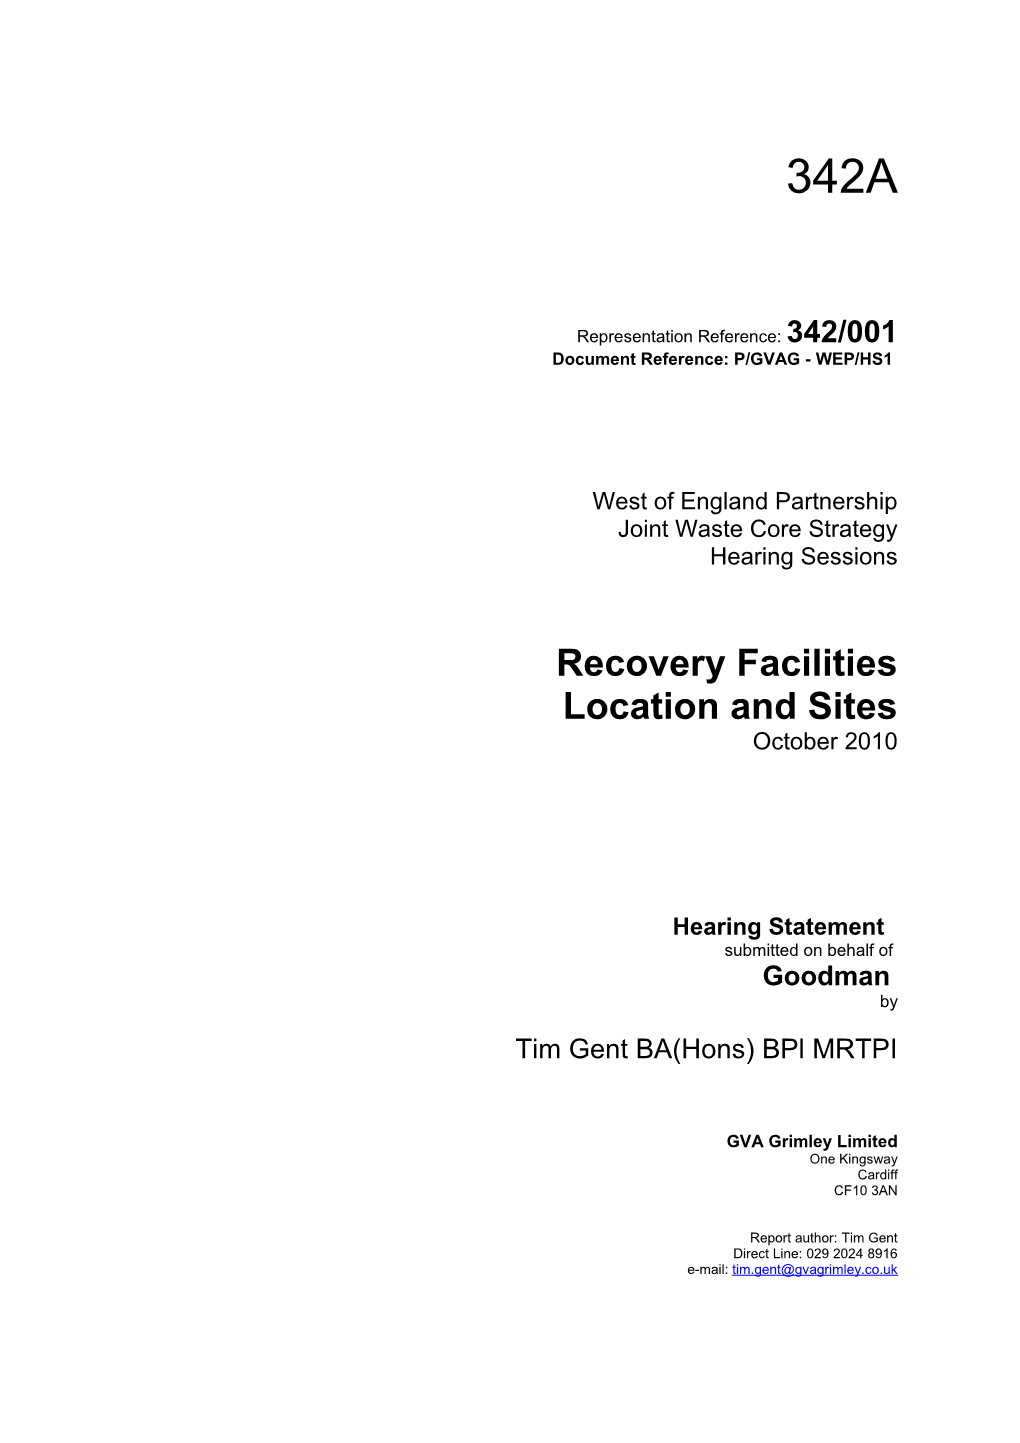 Portfolio Holdings and Gleeson Homes/GVA Grimley (Reference 484)